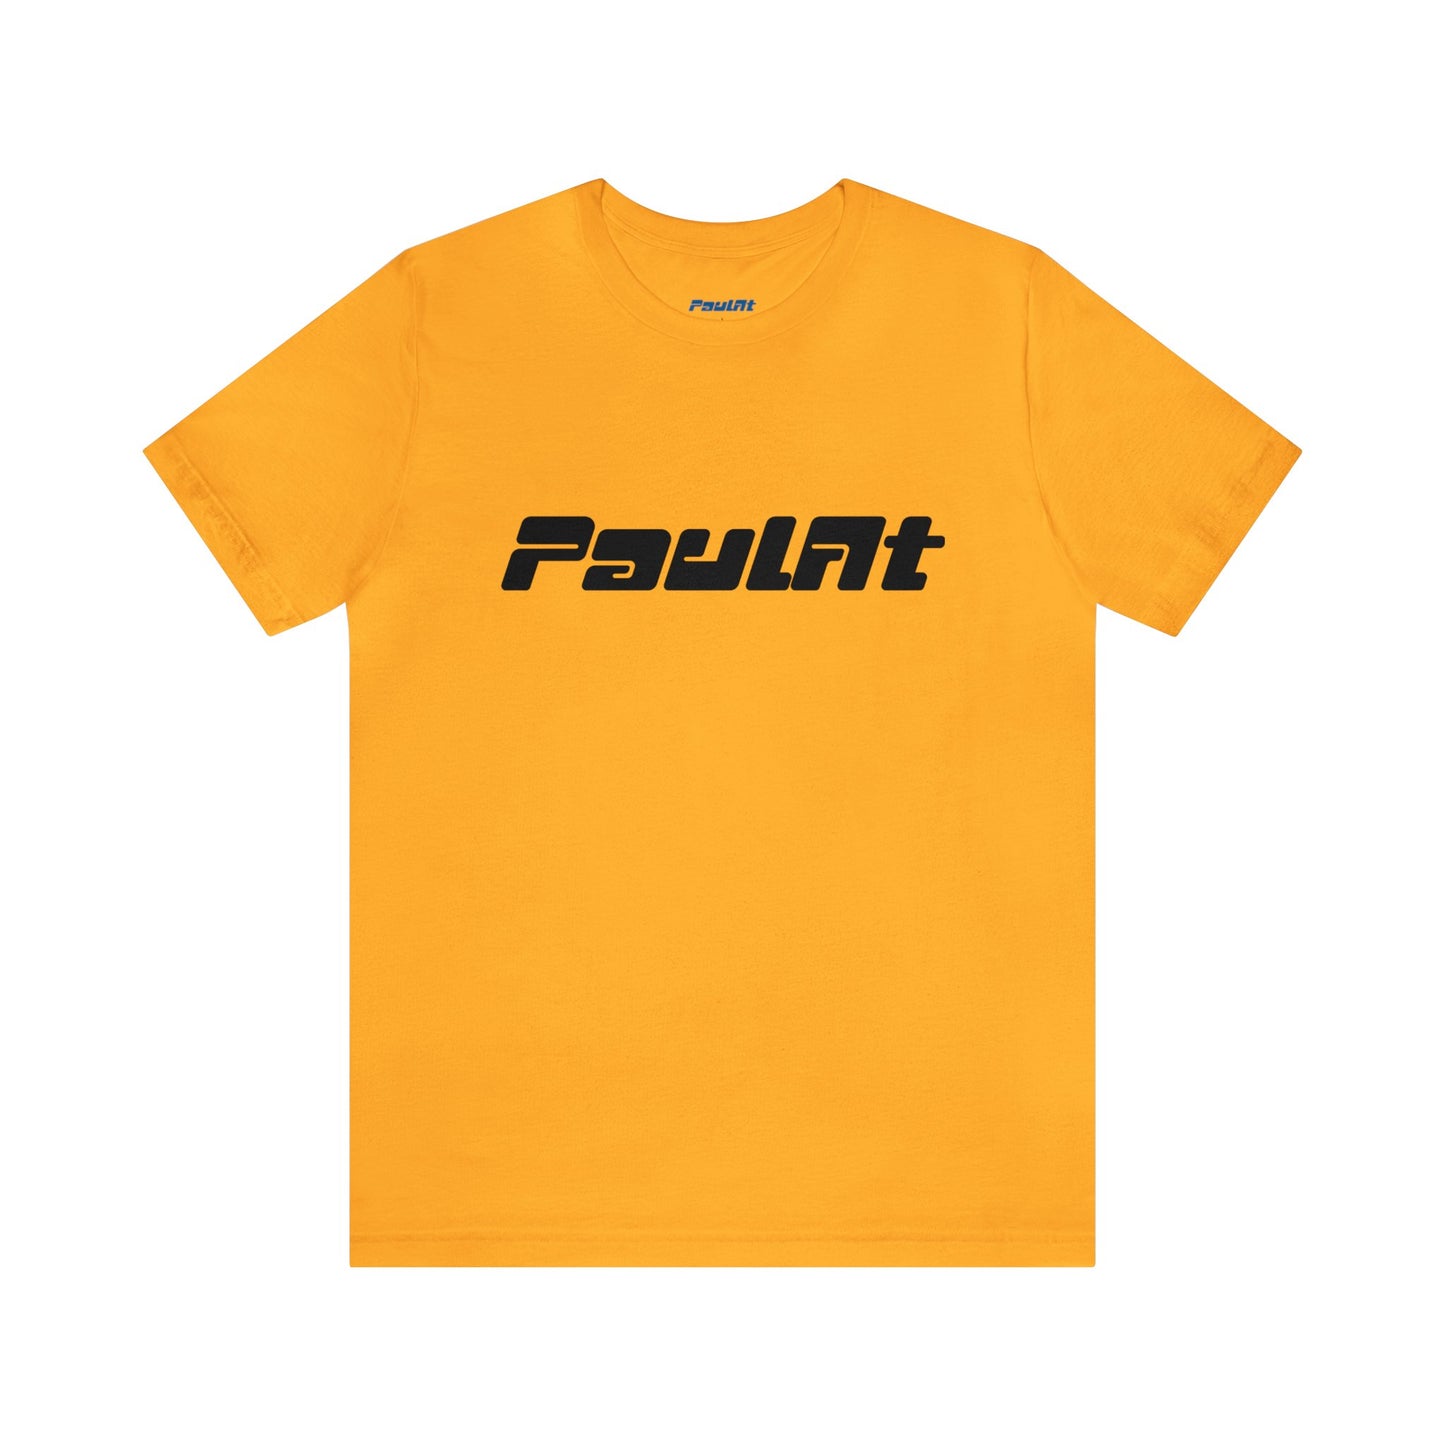 PaulAt Black Logo Unisex T-Shirt